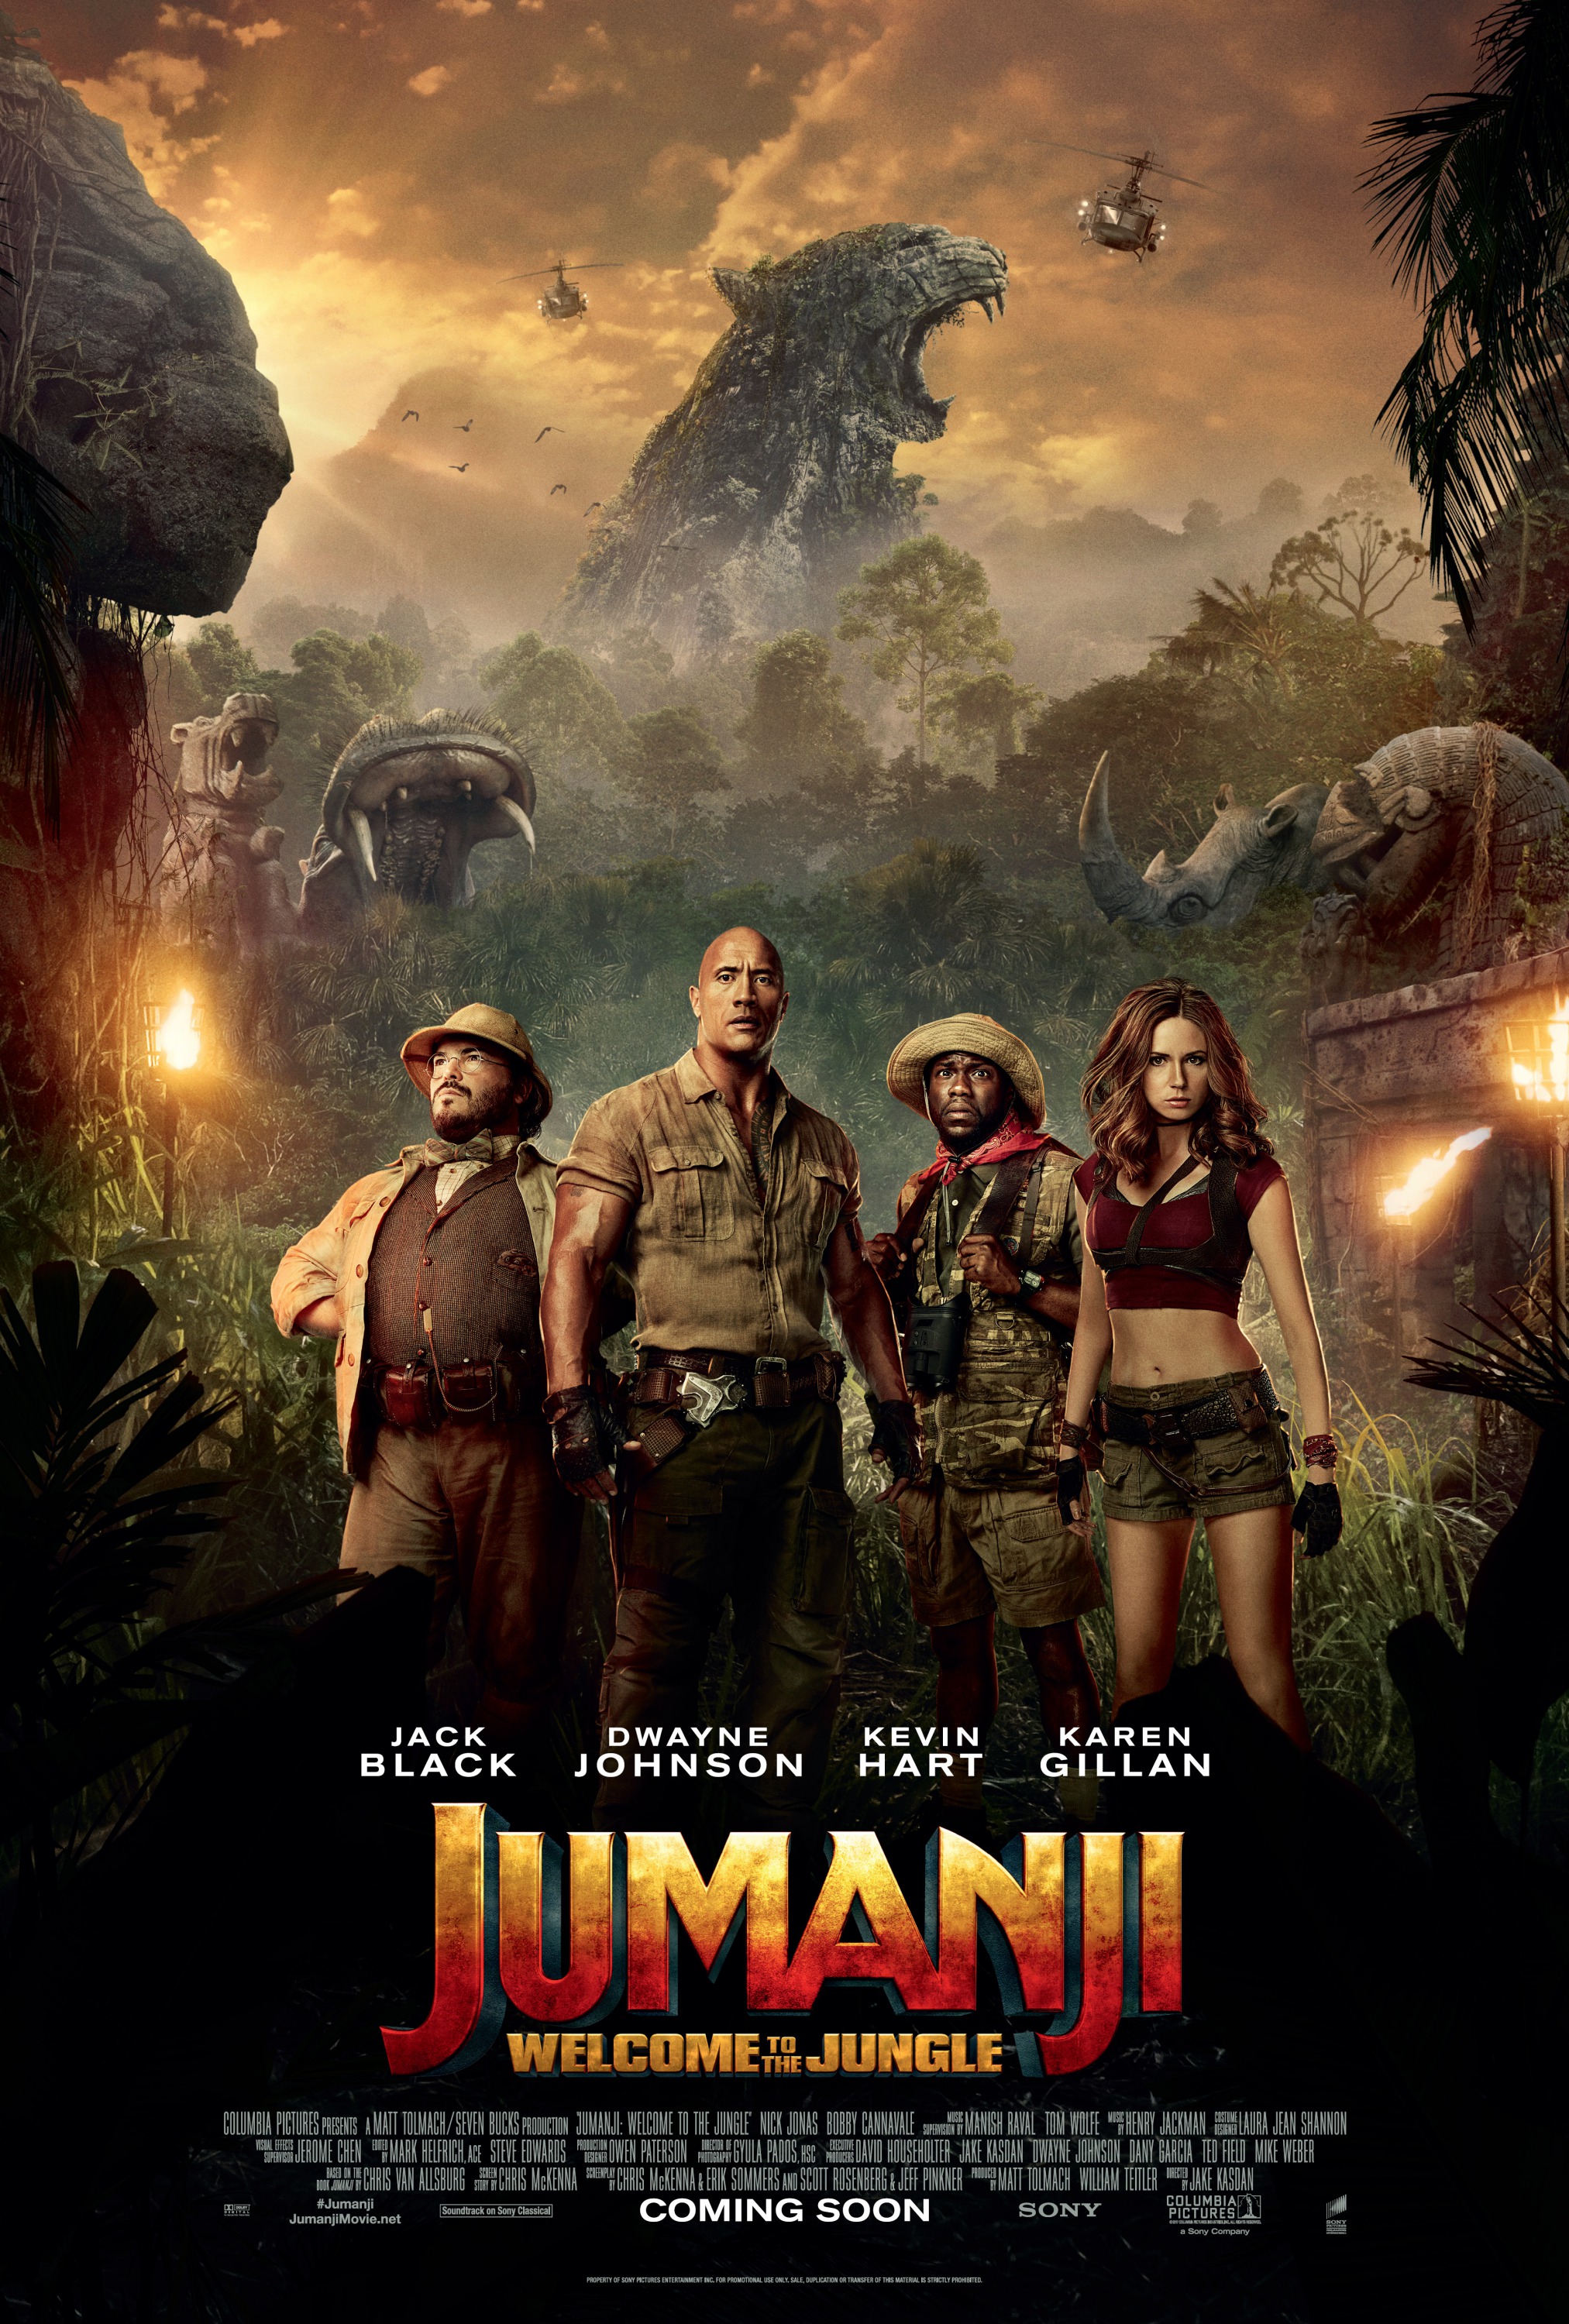 Jumanji Image Wele To The Jungle Poster HD